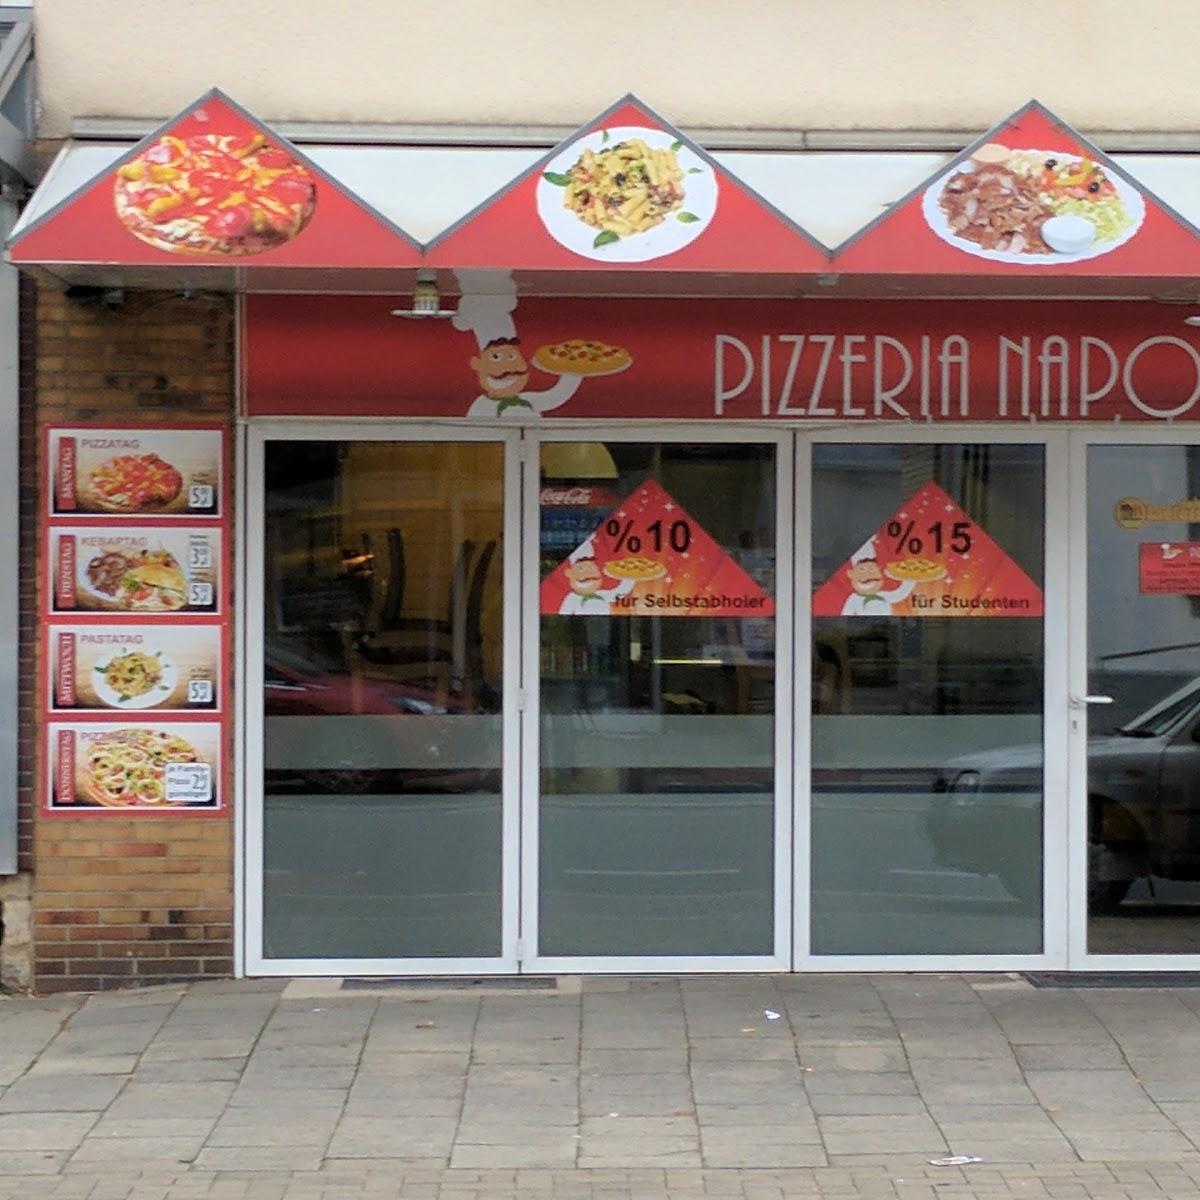 Restaurant "Pizzeria Napoli" in Osnabrück